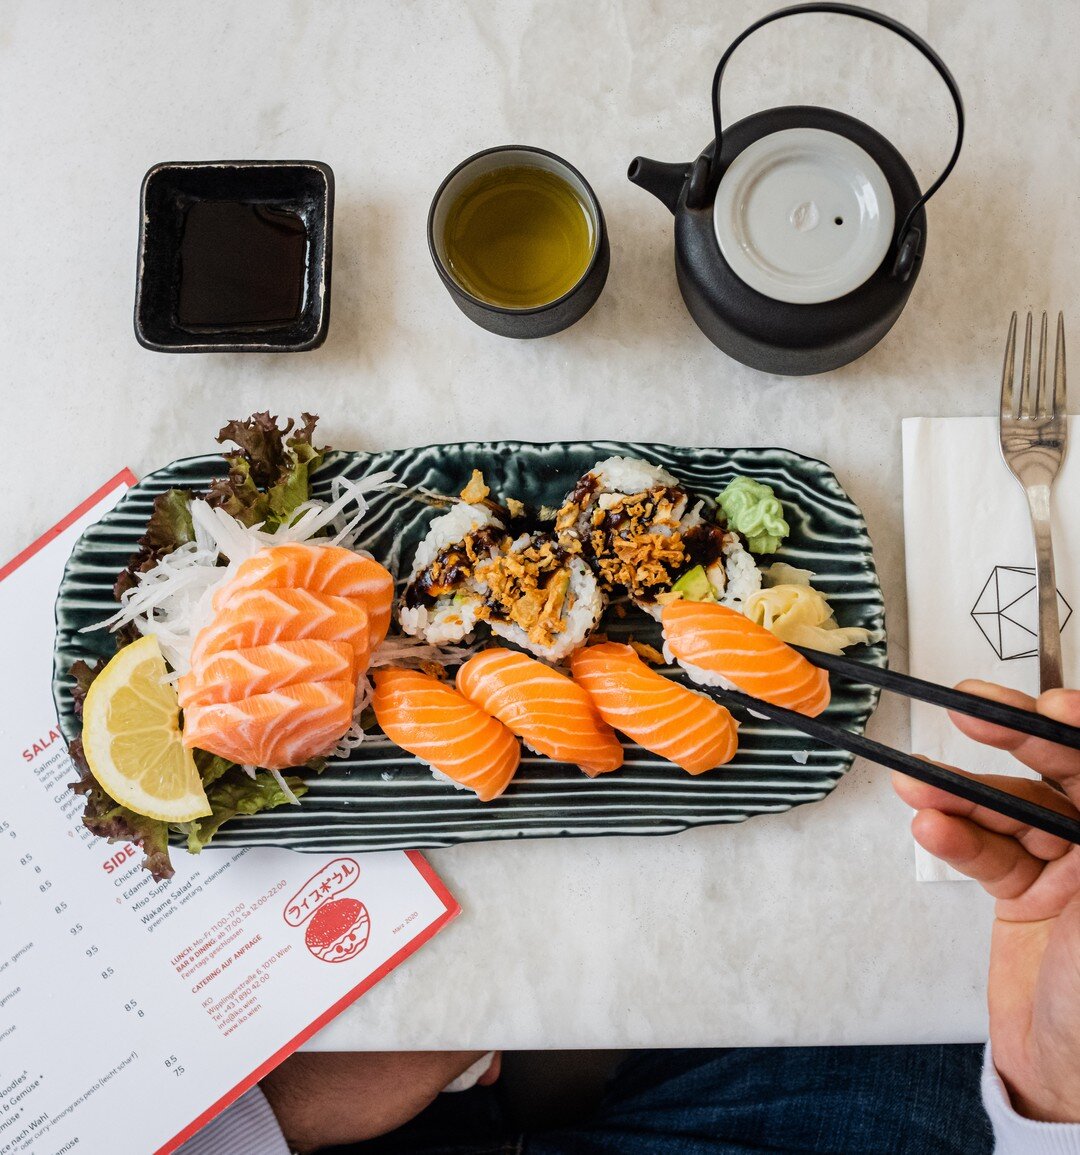 I love Sushi So-y Much!😀🍣⁠
⁠
#ikowien #ikofamily⁠
⁠
Opening Hours: ⁠
Mo - Fr: 11:00 - 22:00 Uhr⁠
Sa: 12:00 - 22:00 Uhr⁠
.⁠
📸@wynnflorante ⁠
.⁠
.⁠
.⁠
#lovefood #wien #1010 #falstaff #falstaffliving #sushi #gastrowien #foodguidevienna #viennafoodgui